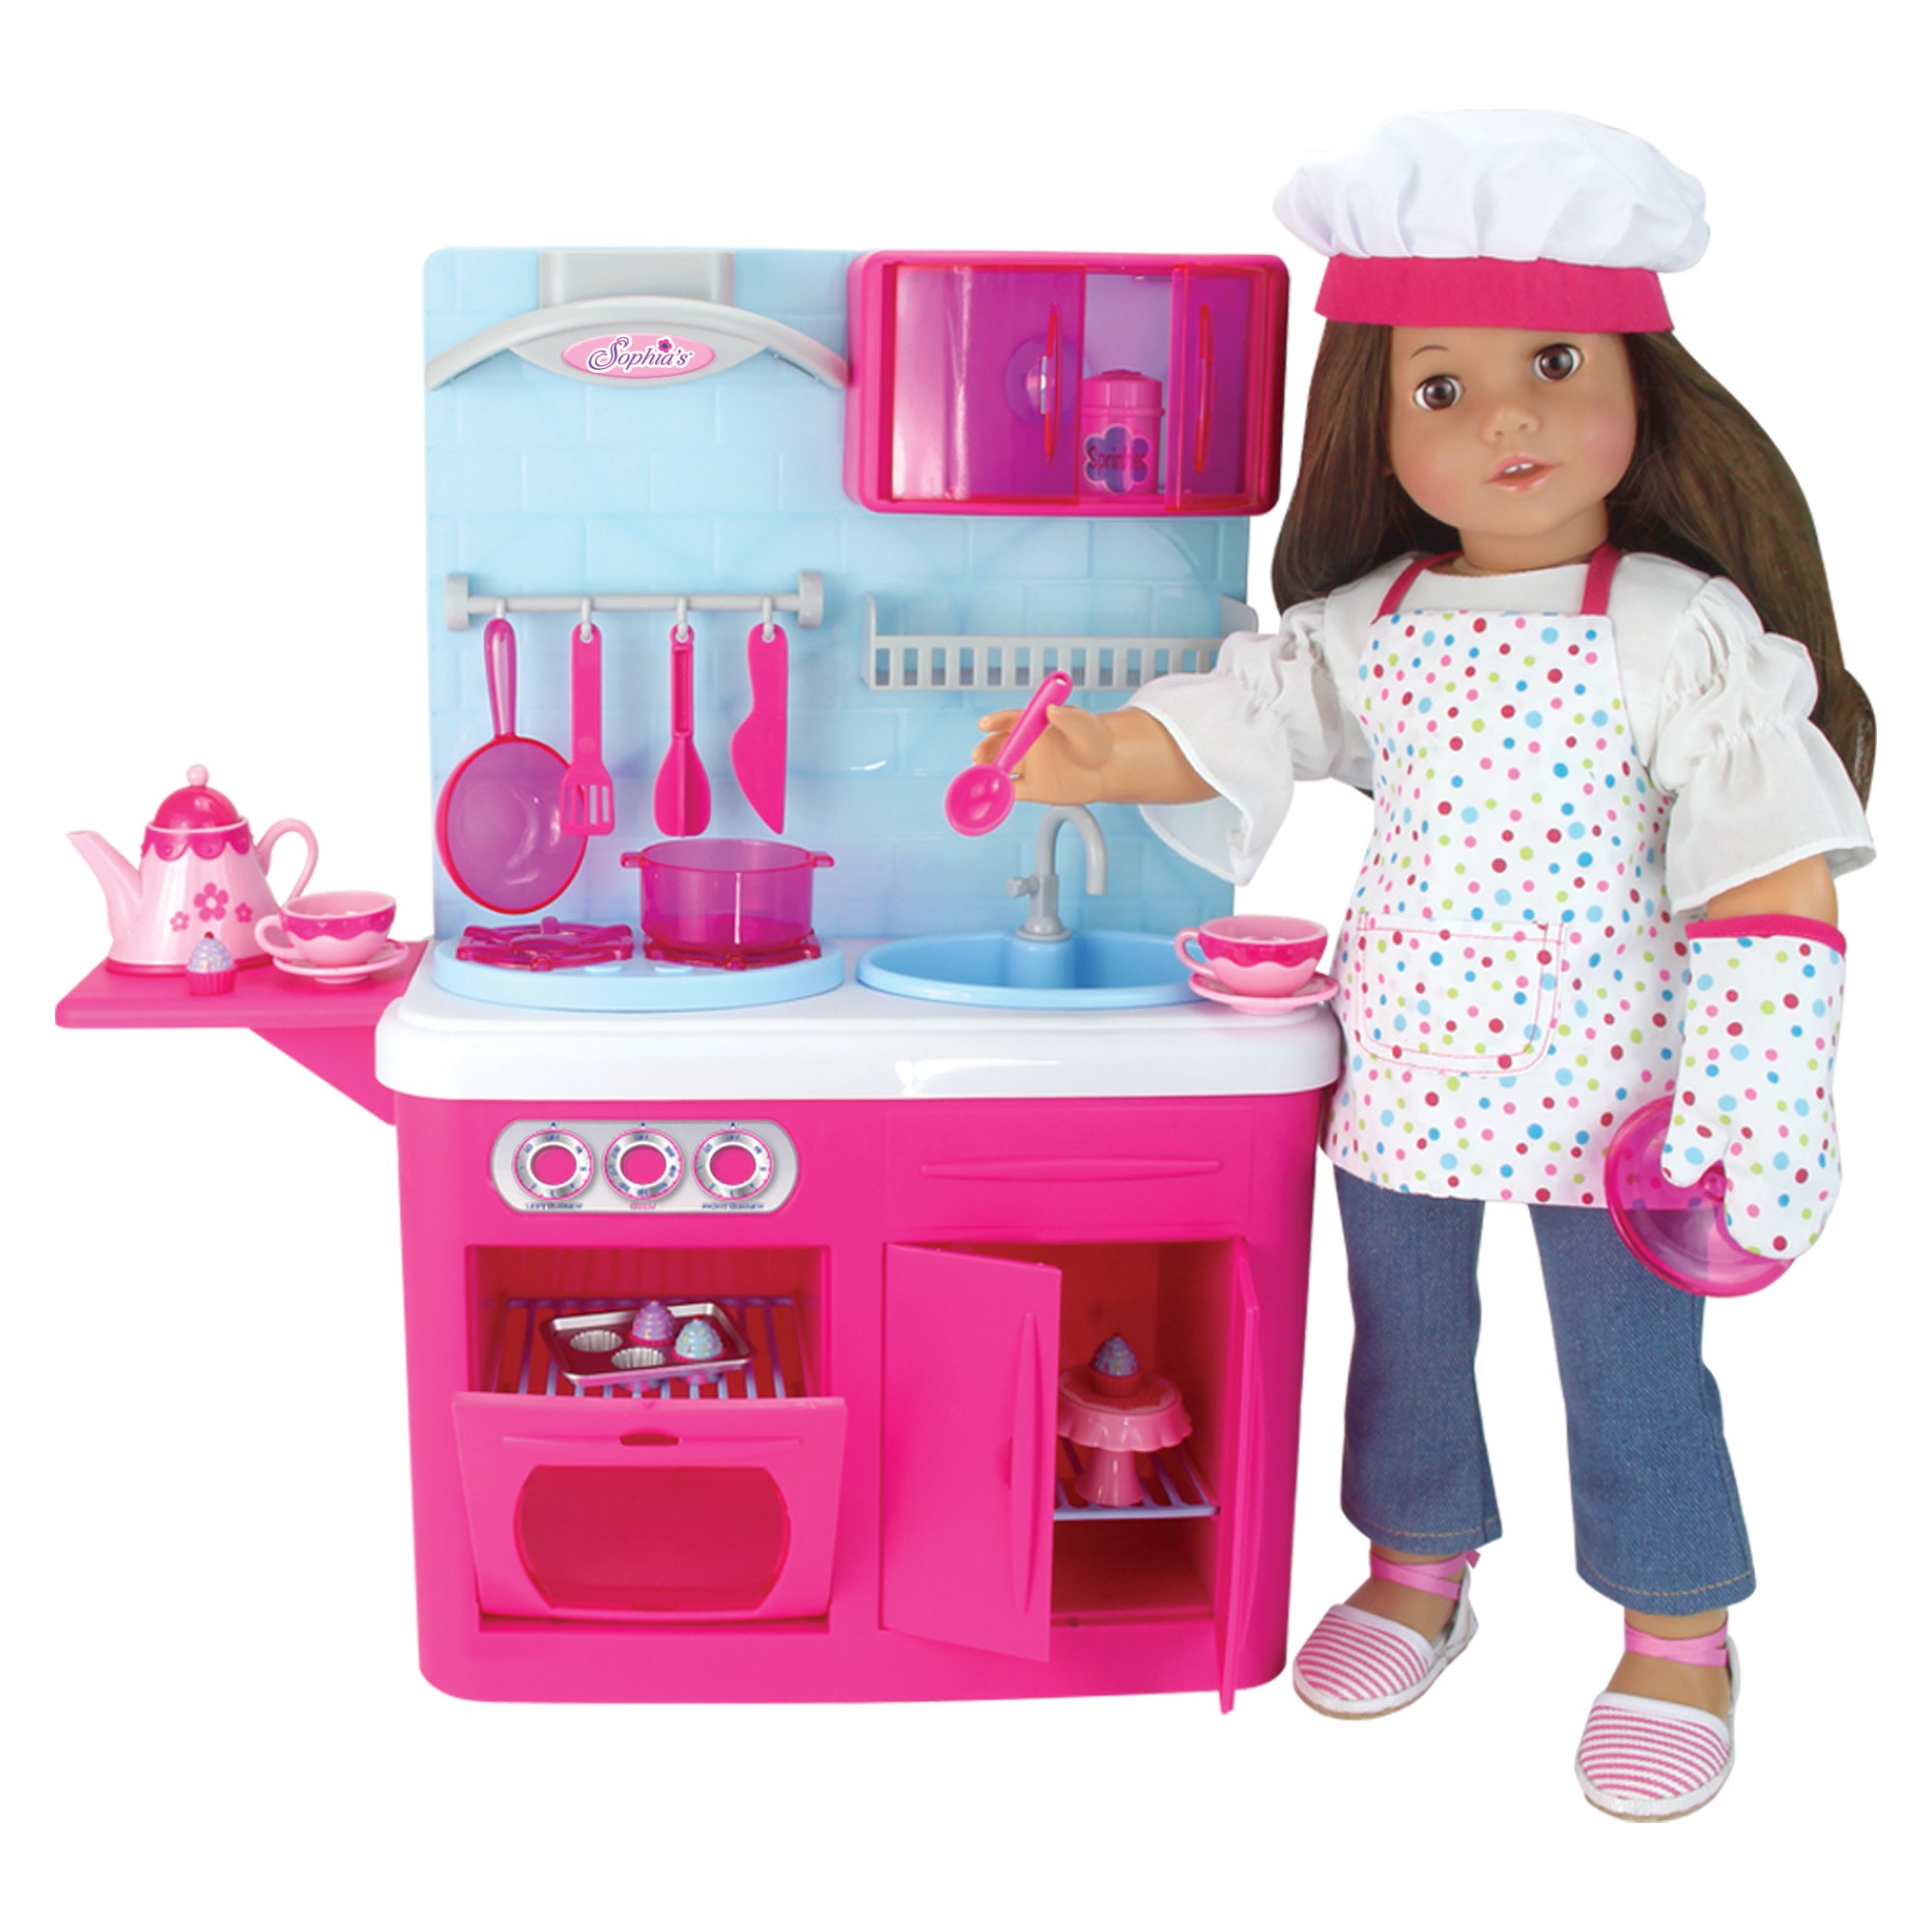 Sophias Doll Kitchen with Baking Accessories Set for 18" Dolls